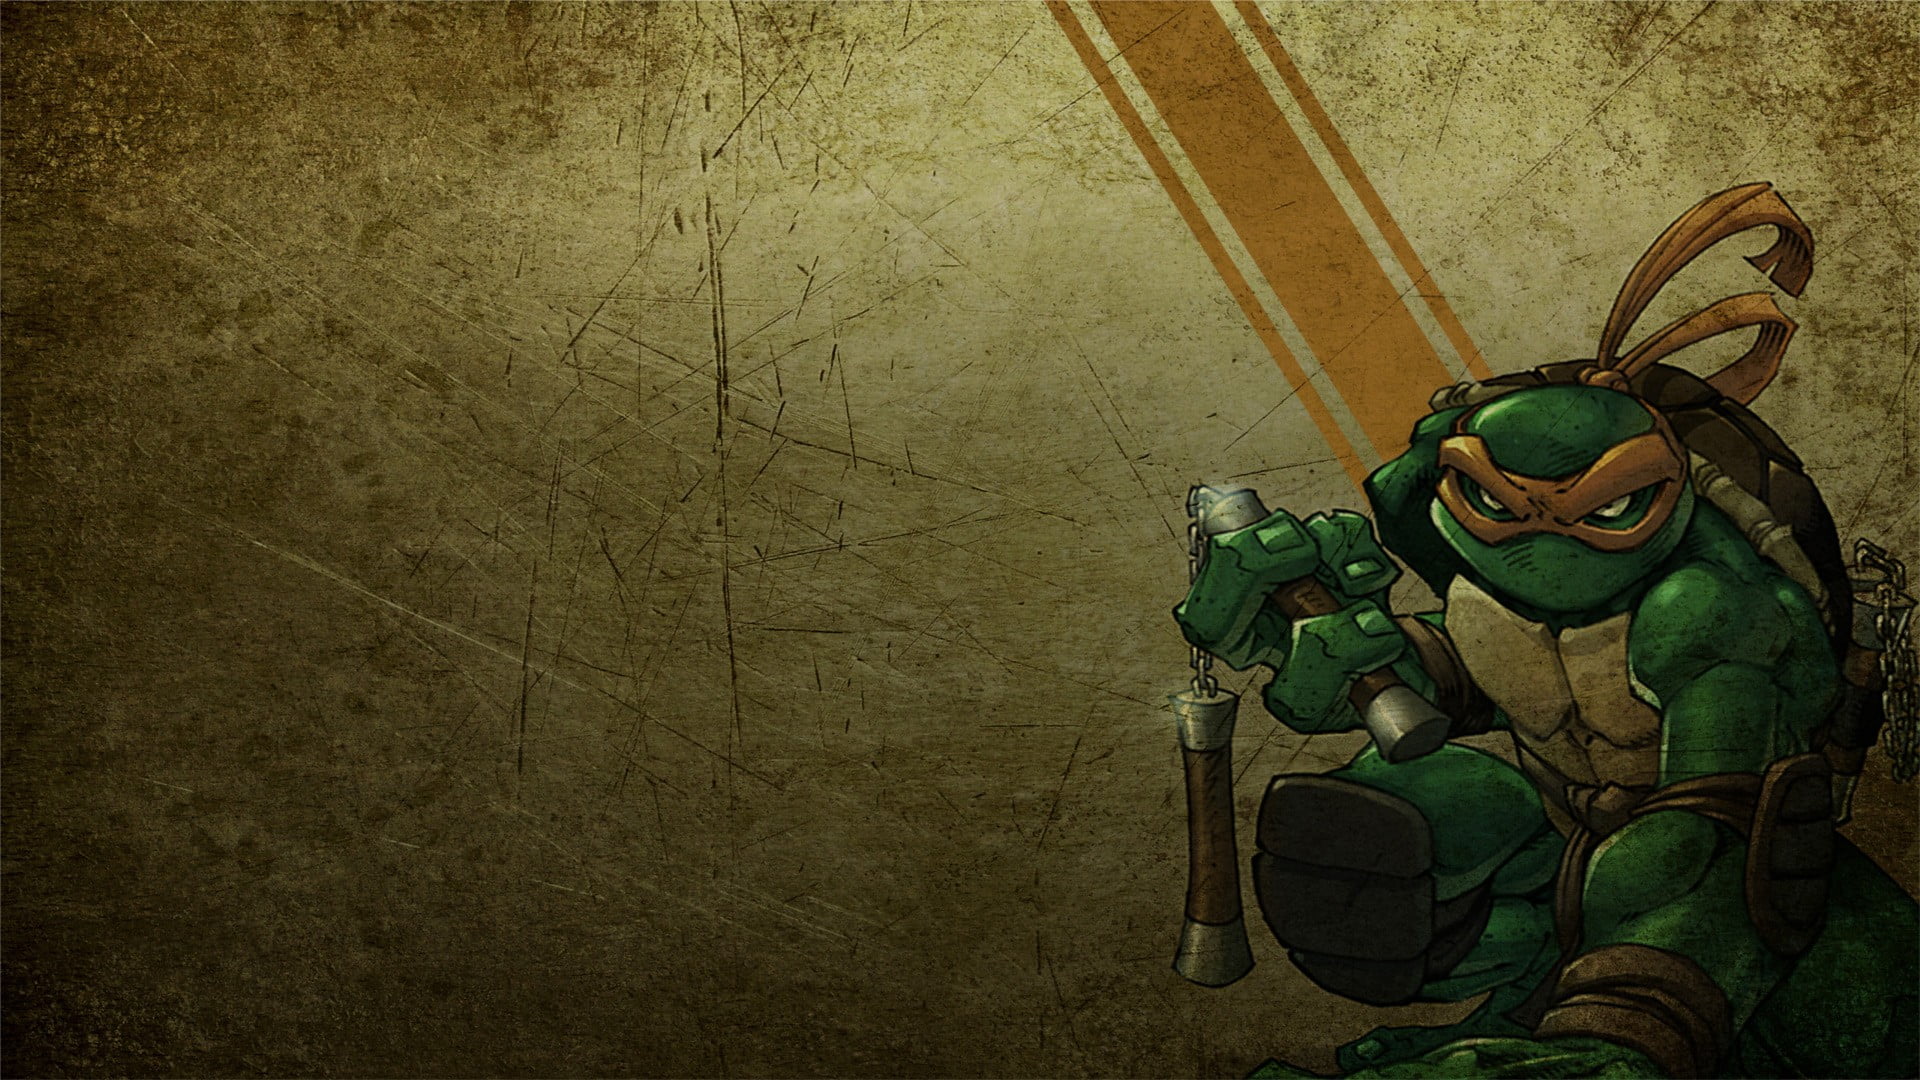 Michelangelo Teenage Mutant Ninja Turtles illustration, Tartarugas Ninja, Teenage Mutant Ninja Turtles, Michelangelo